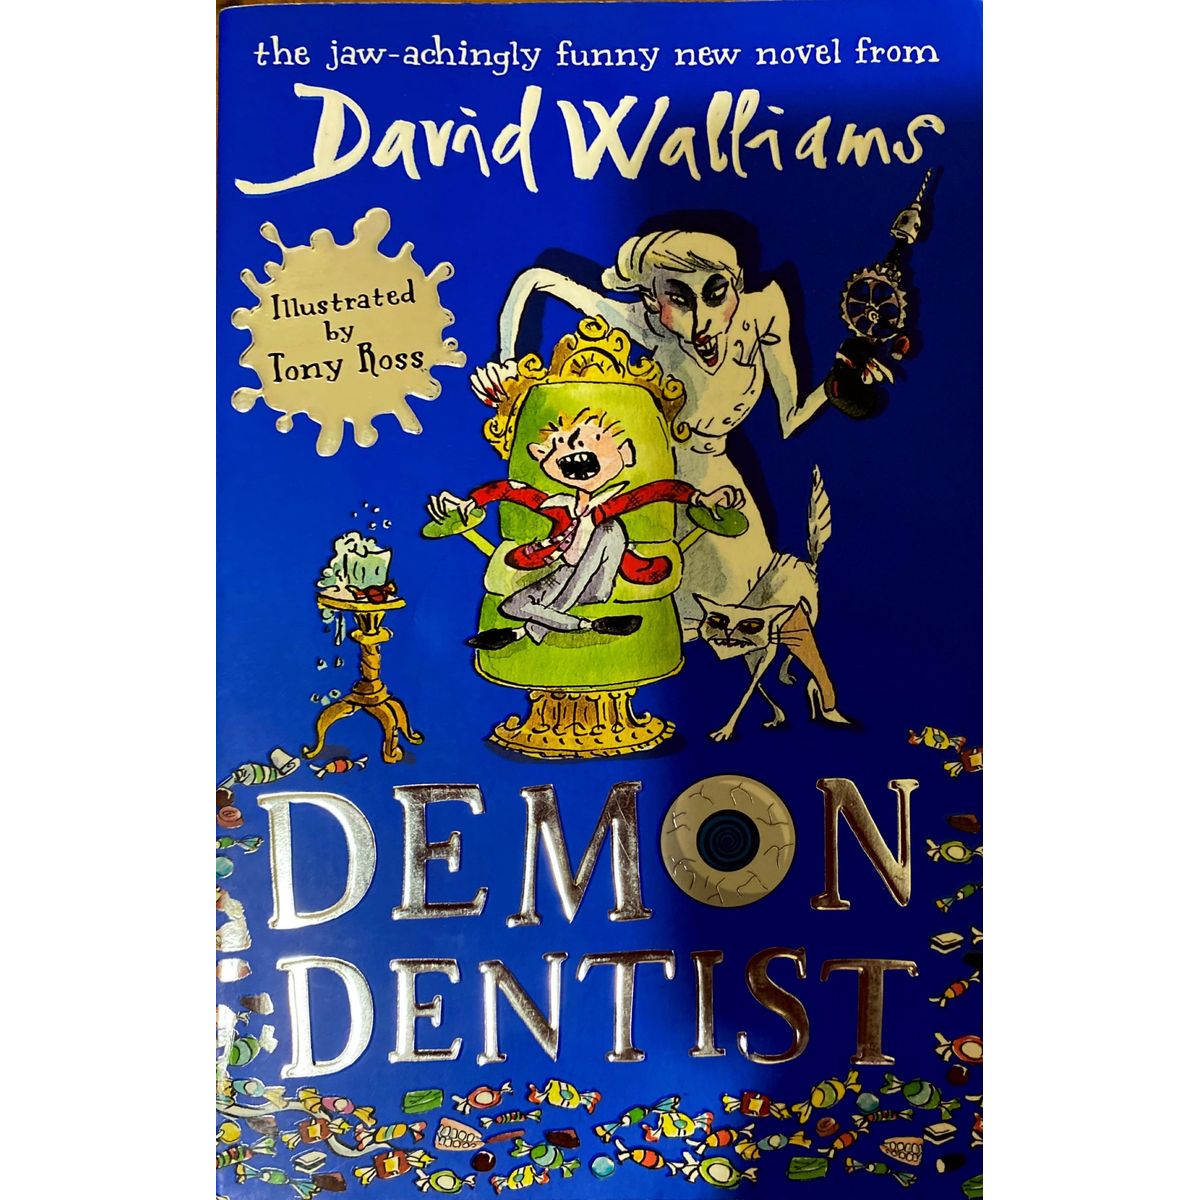 ISBN: 9780007453573 / 0007453574 - Demon Dentist by David Walliams [2013]